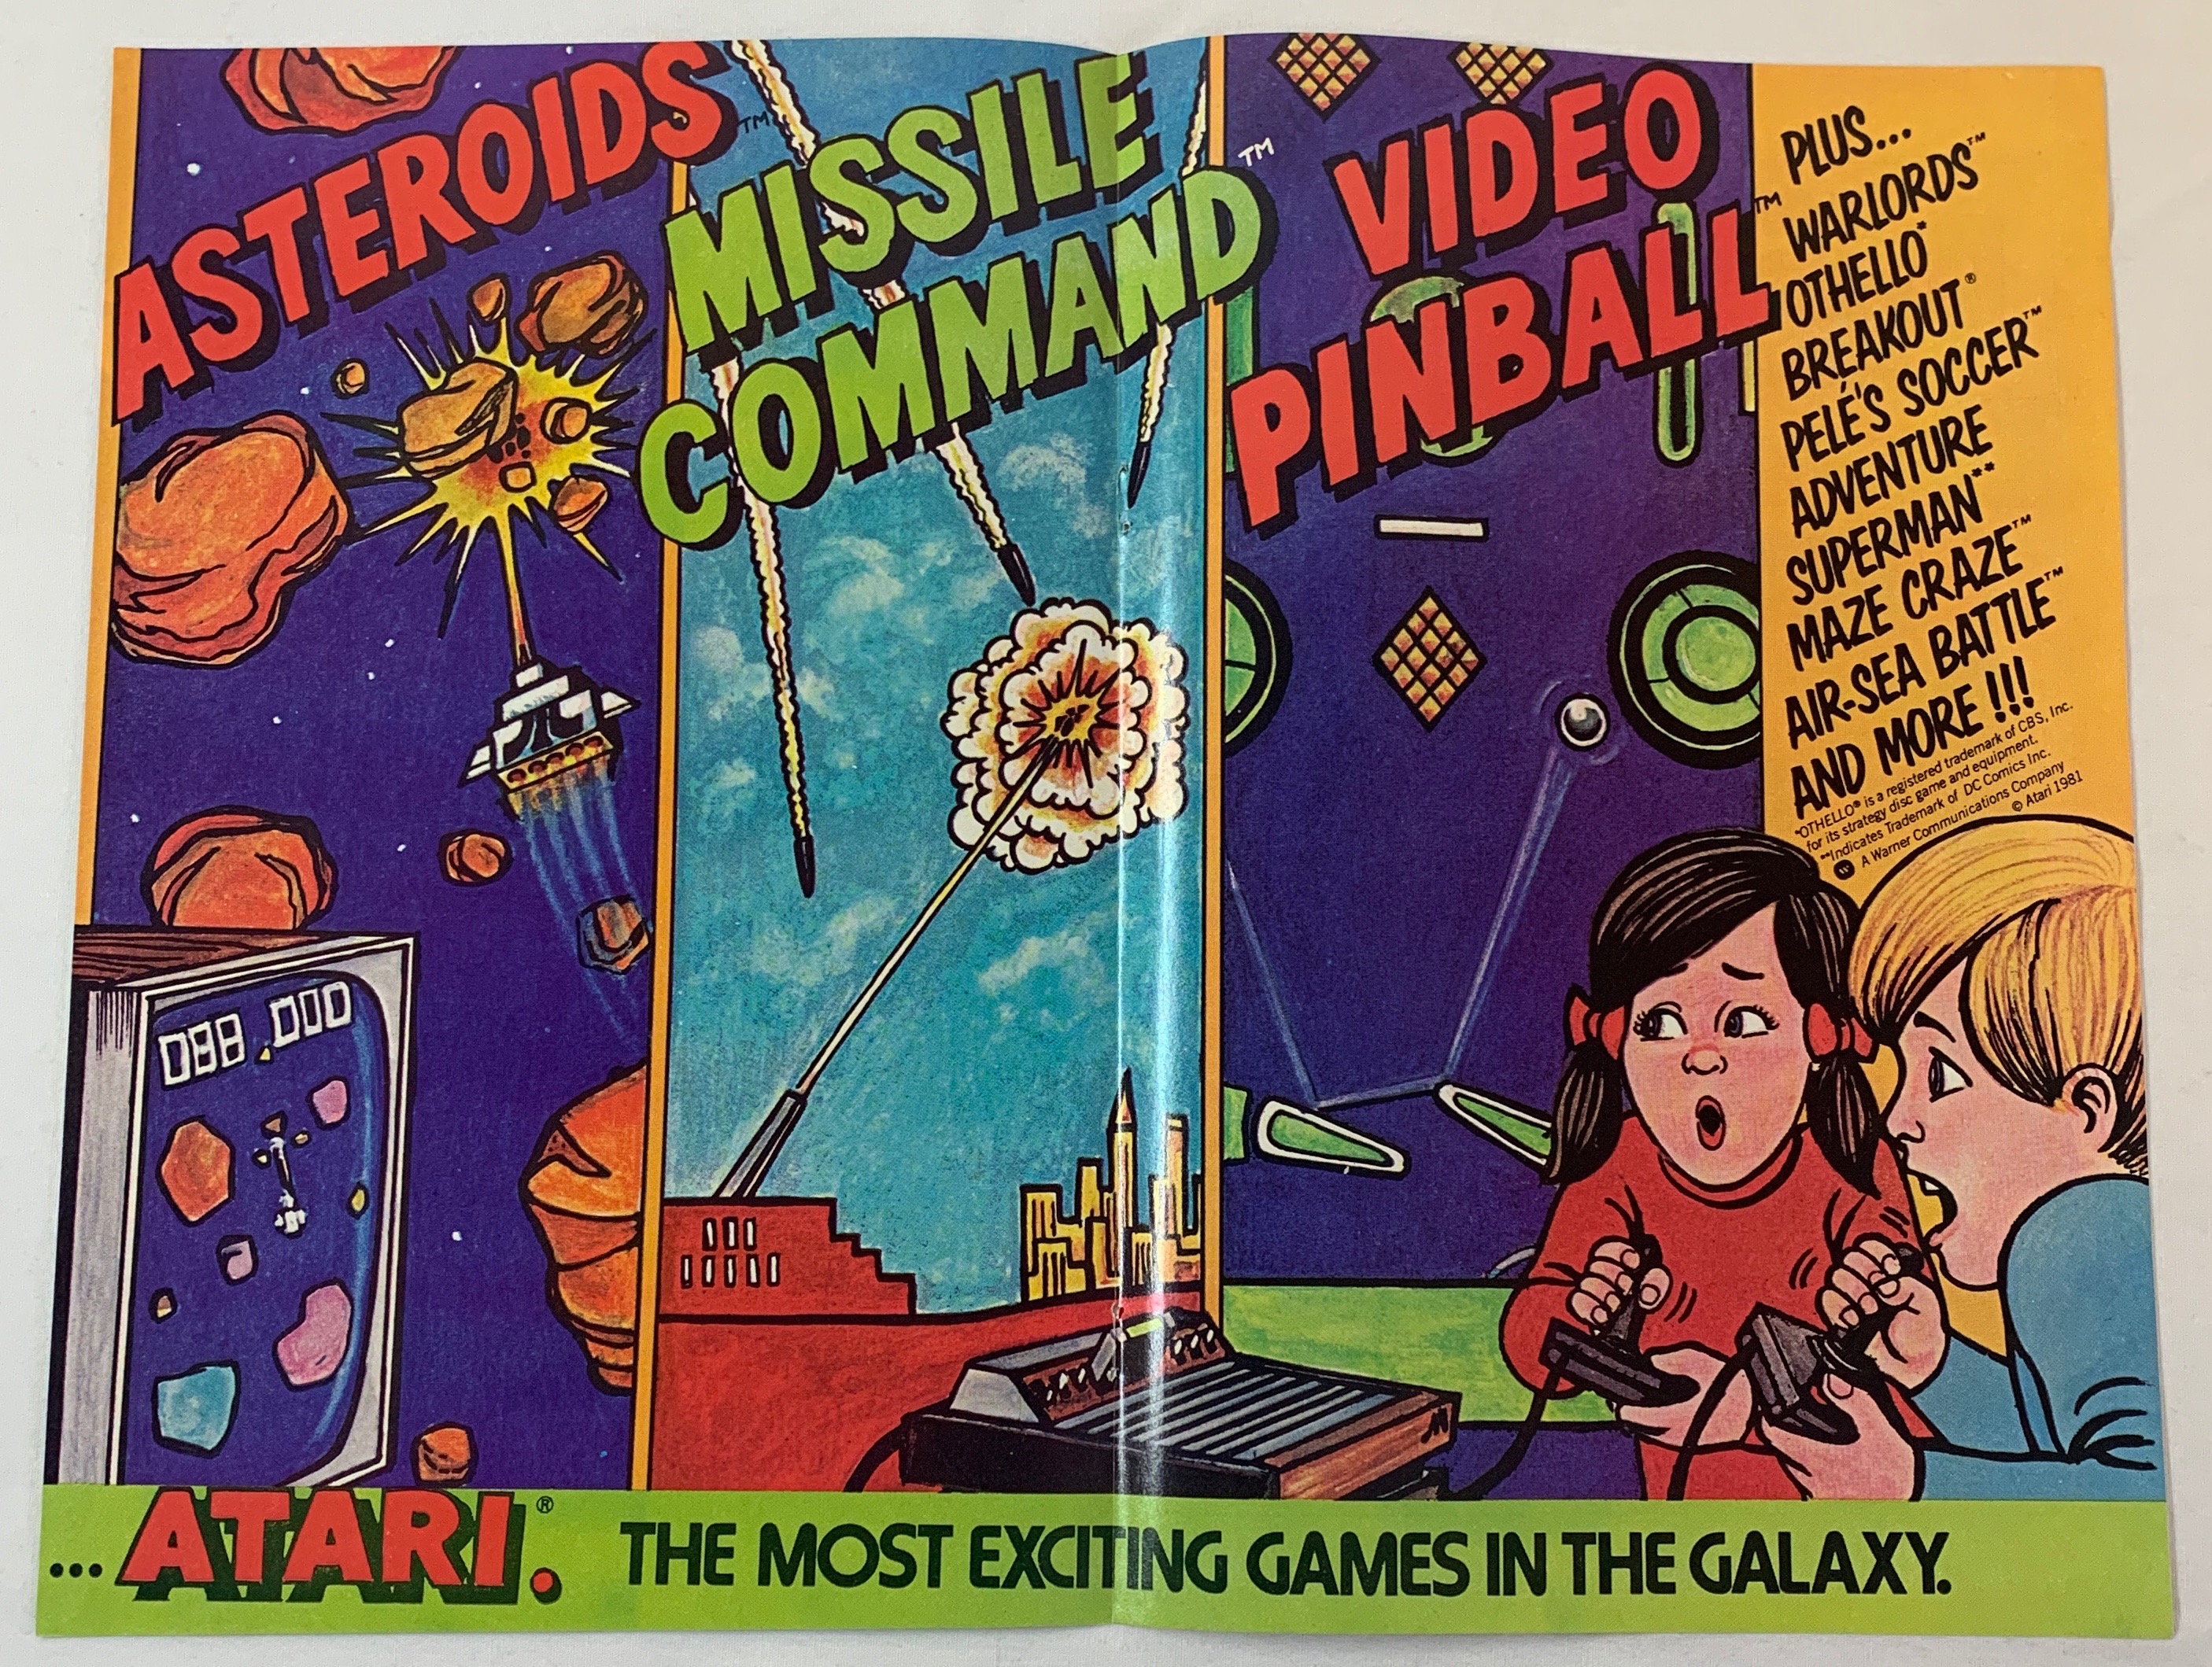 Asteroids - Atari - Shock Games